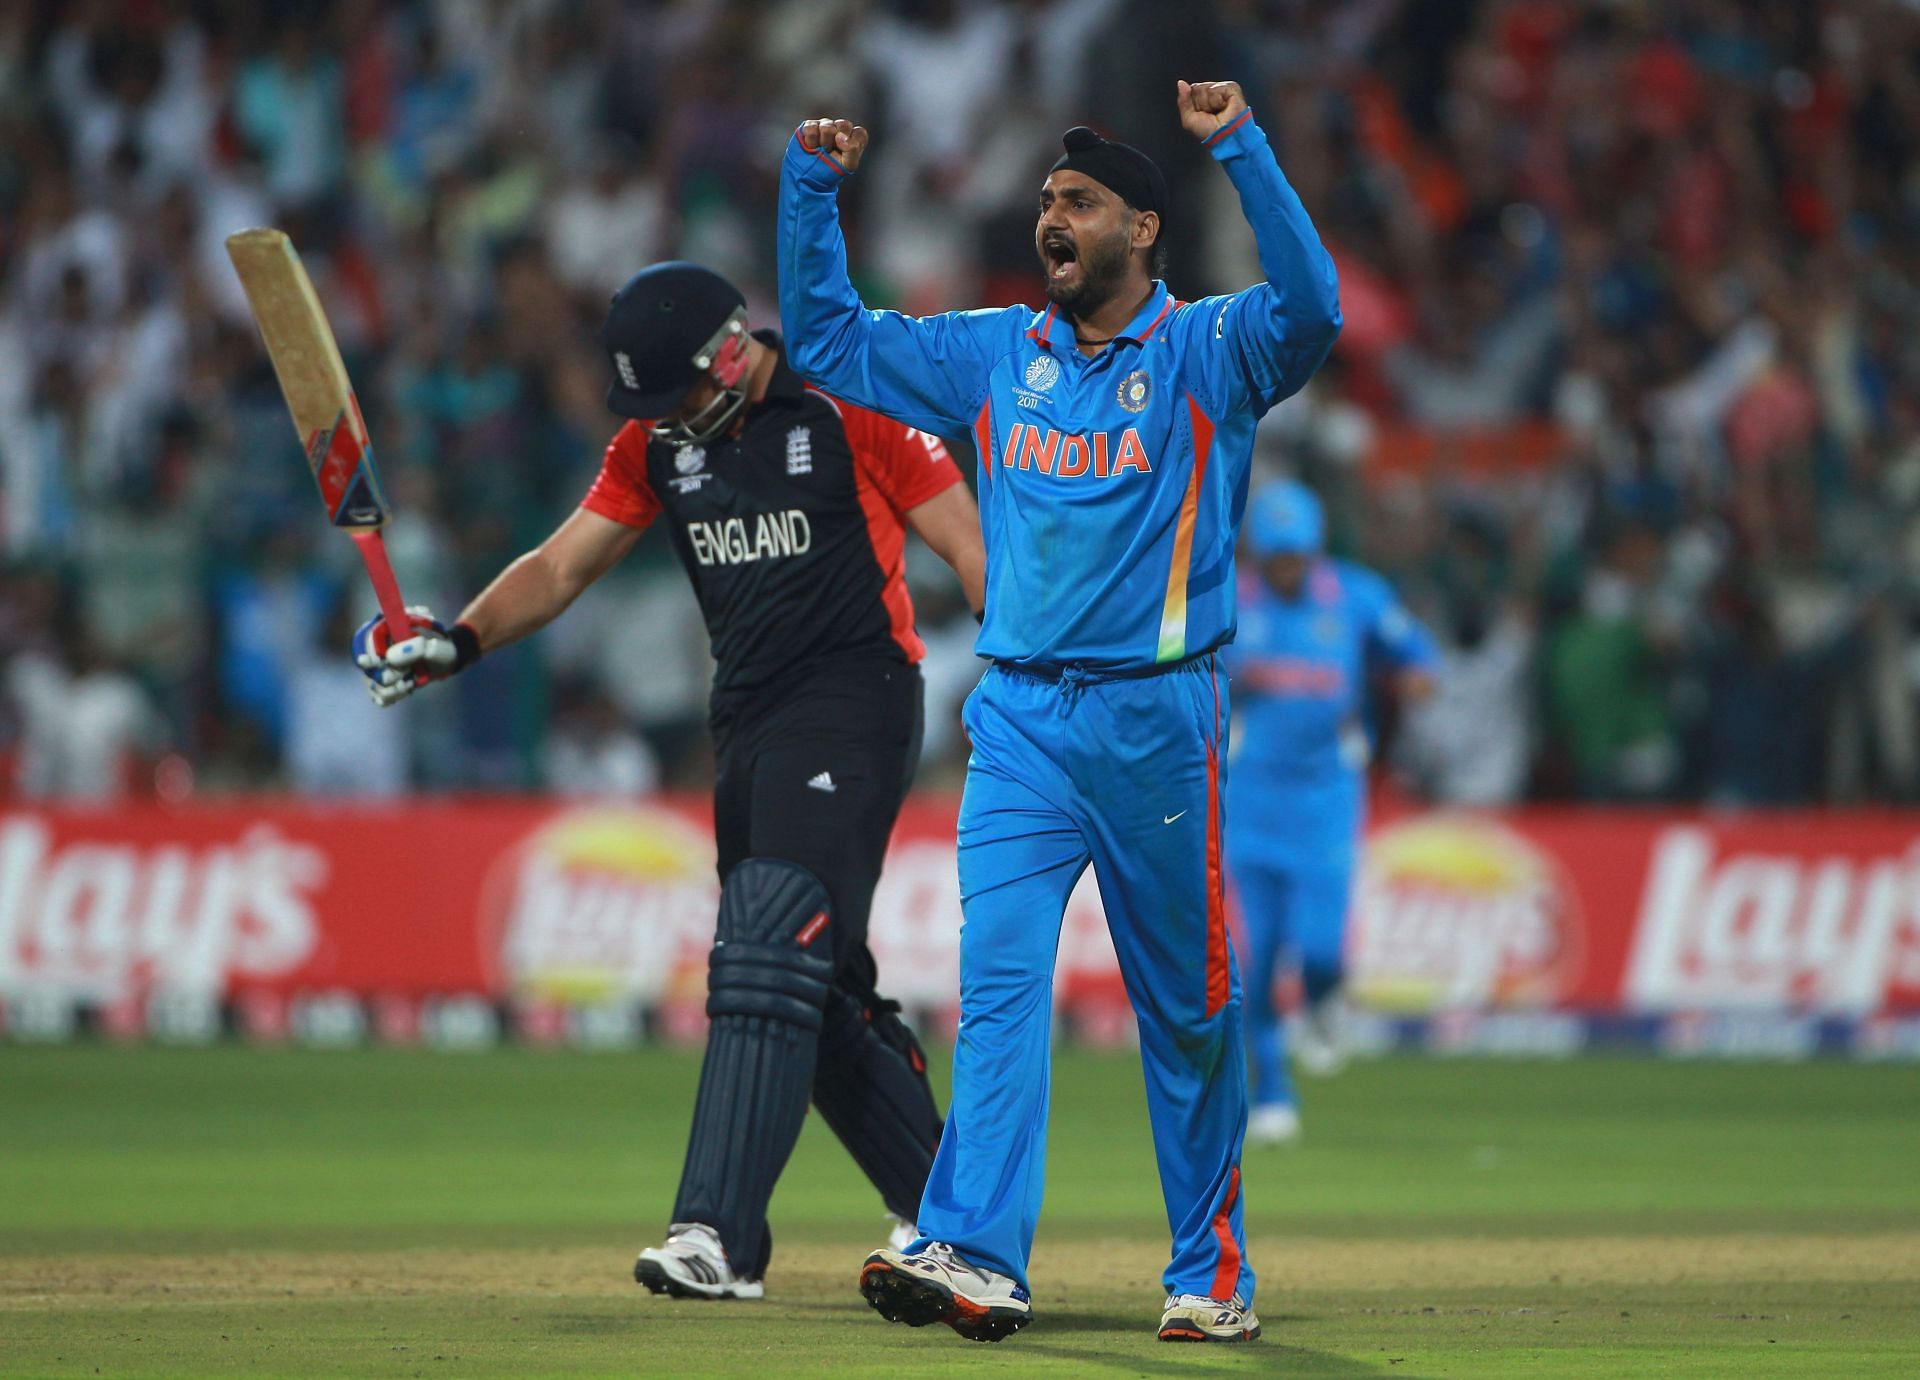 Harbhajan was a match-winner for India